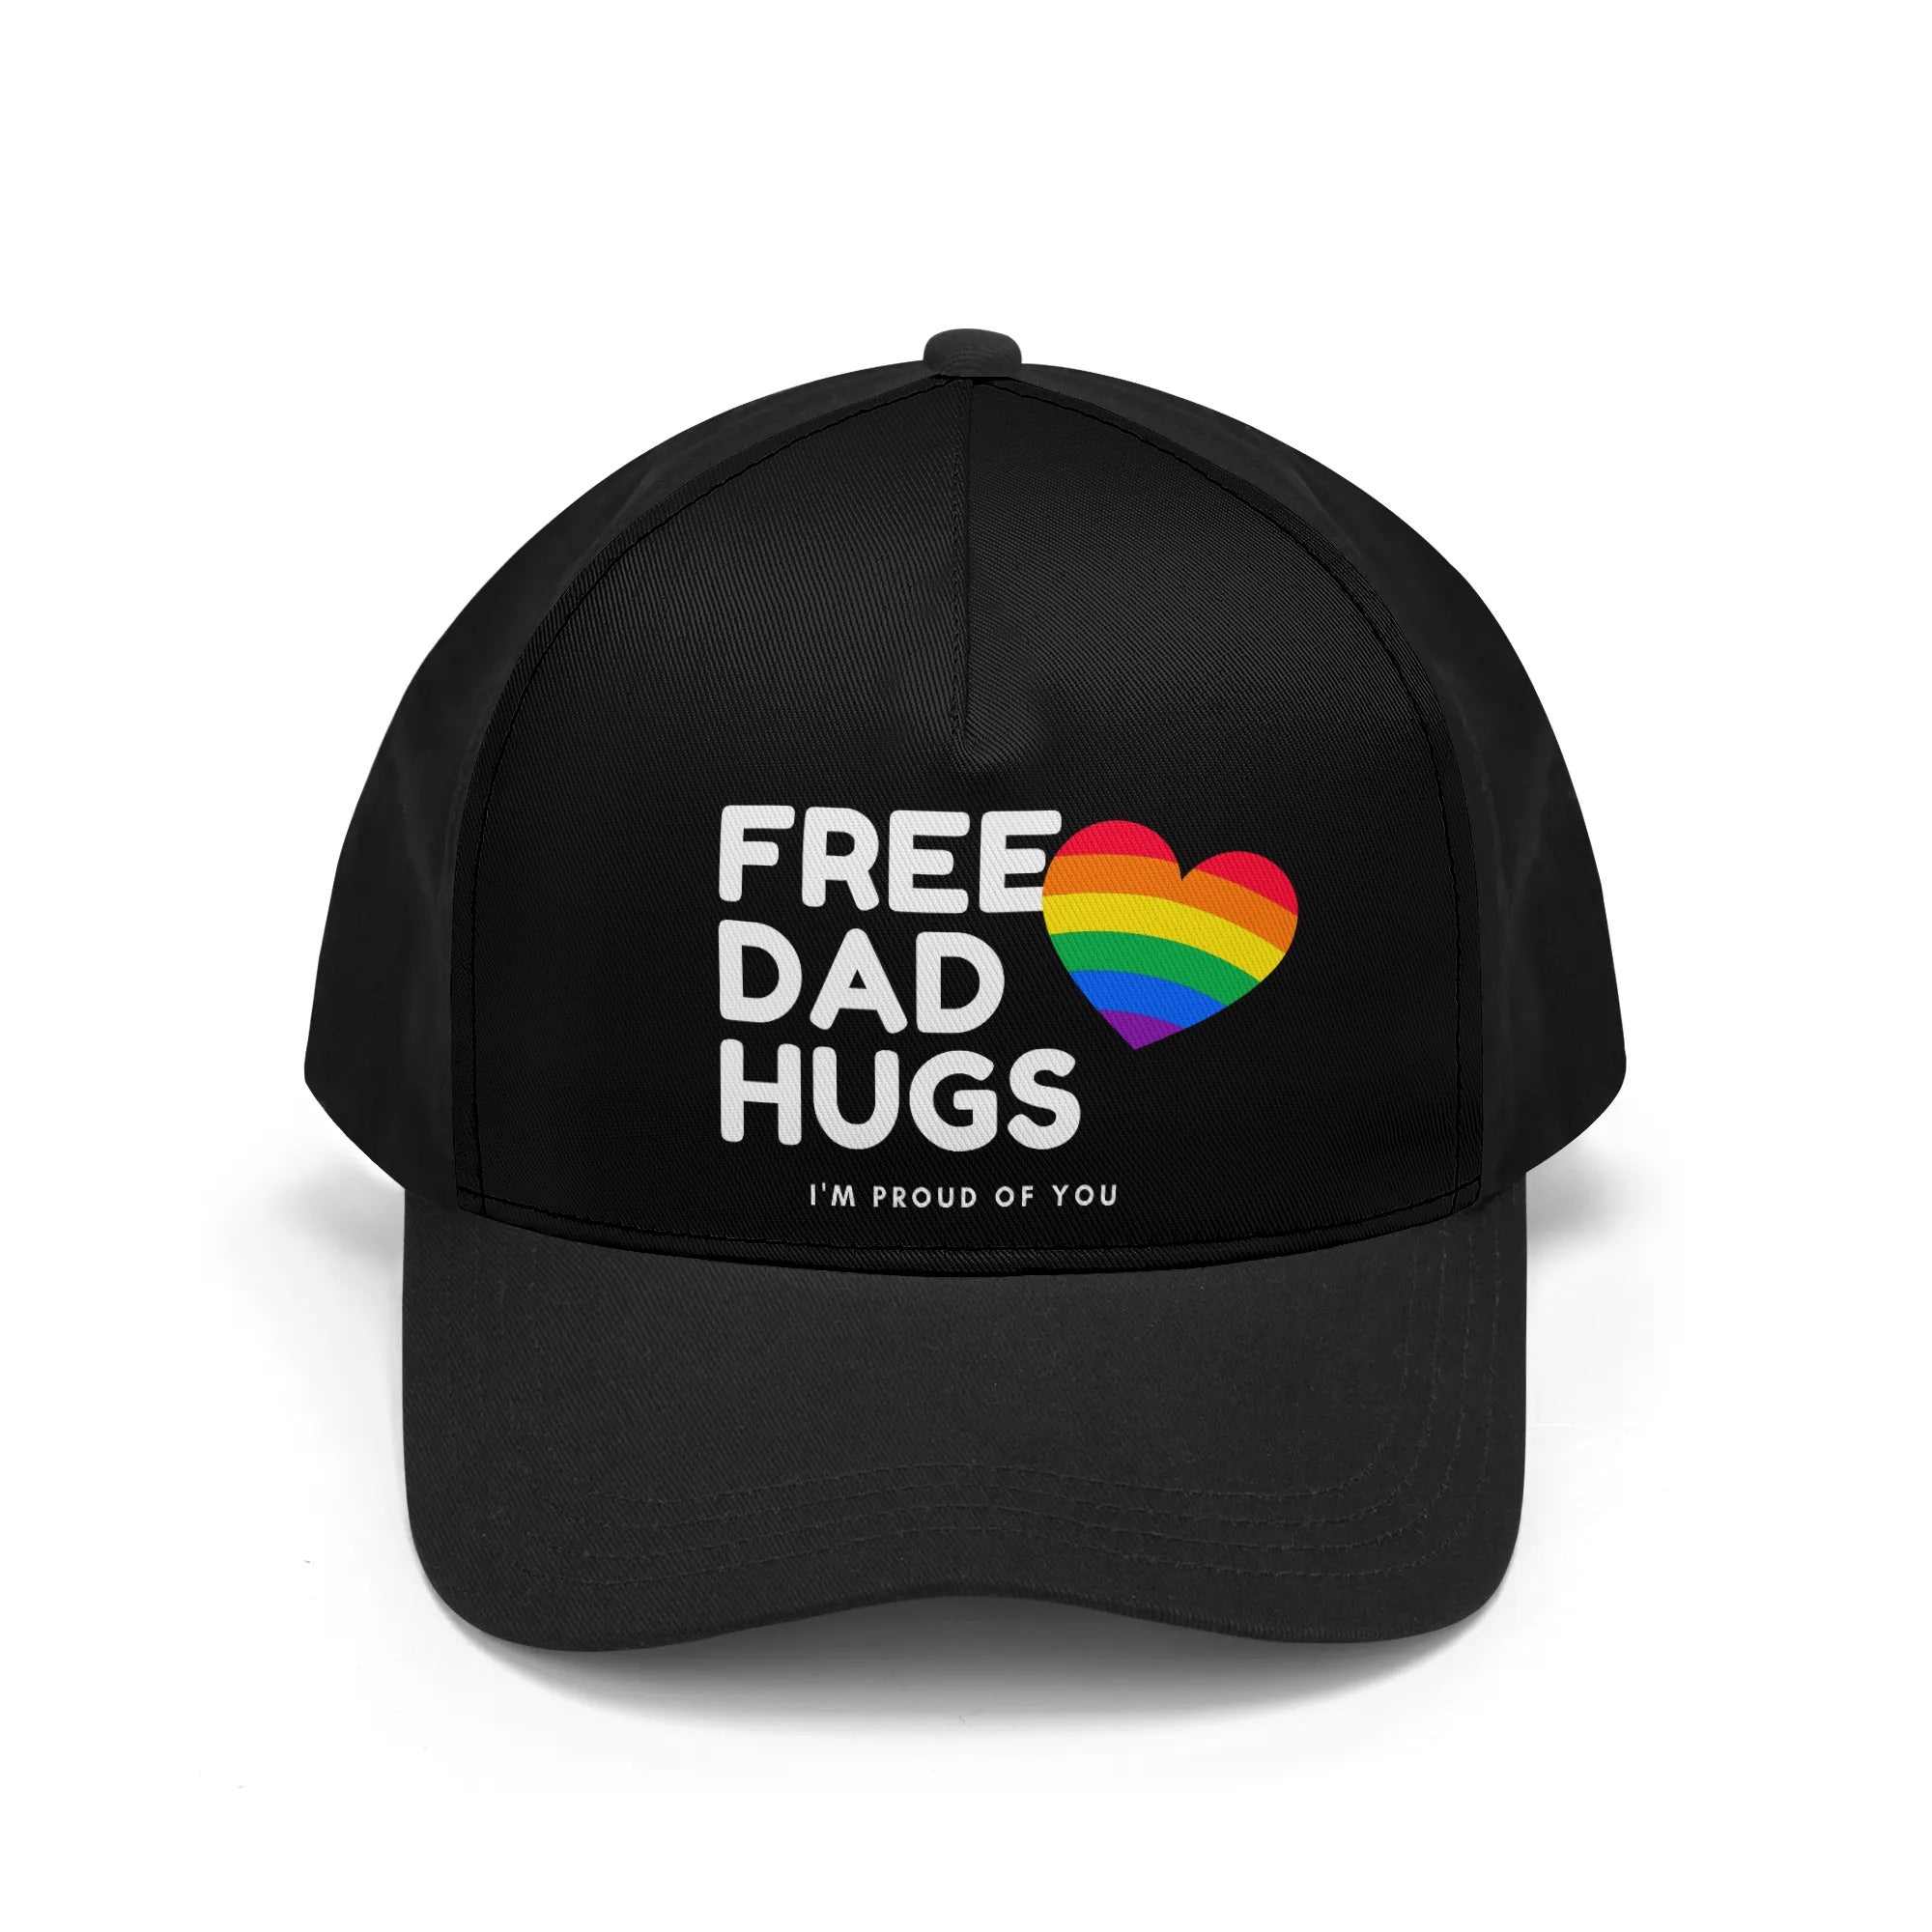 Free Dad Hugs Printed Baseball Cap